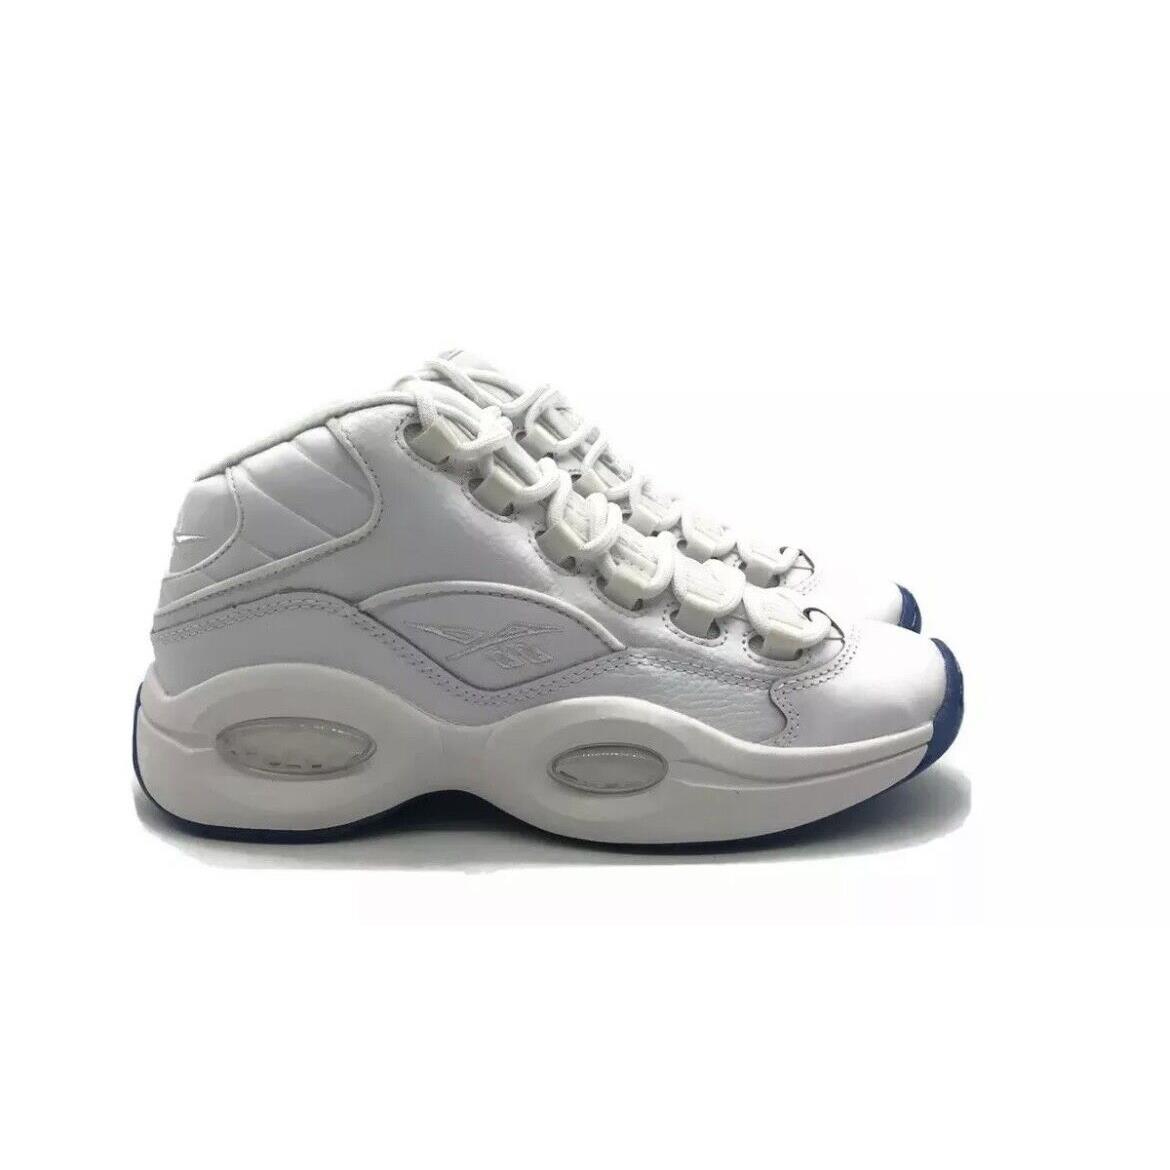 Reebok Question Mid J Iverson Big Kids Basketball Shoe White School Sneaker